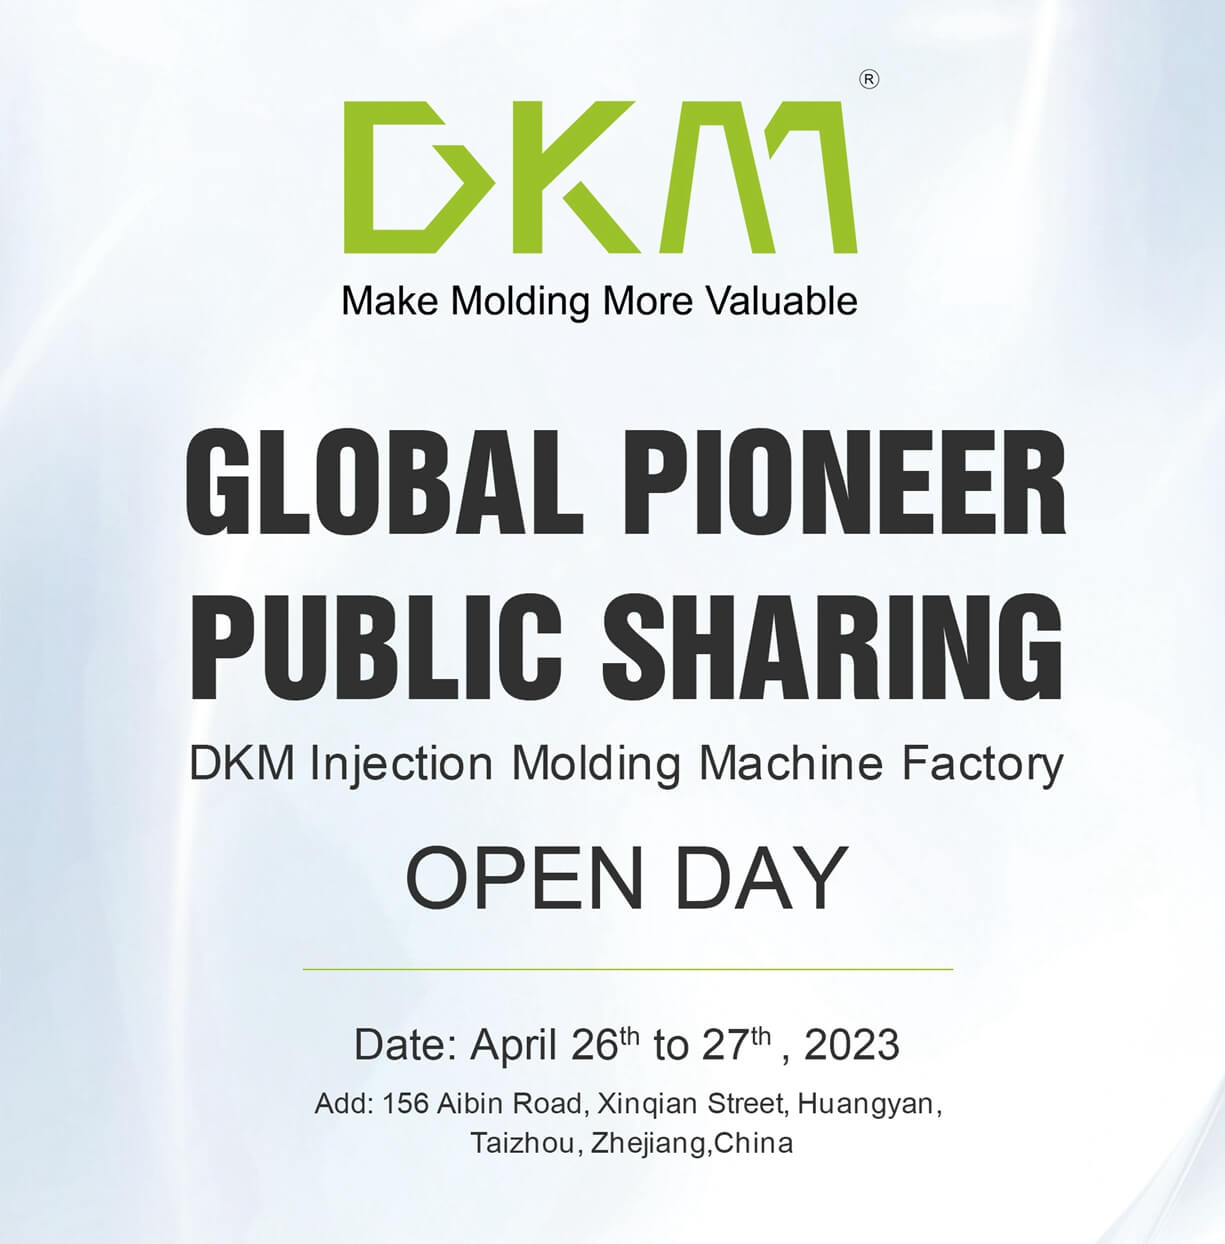 DKM Open Day Information